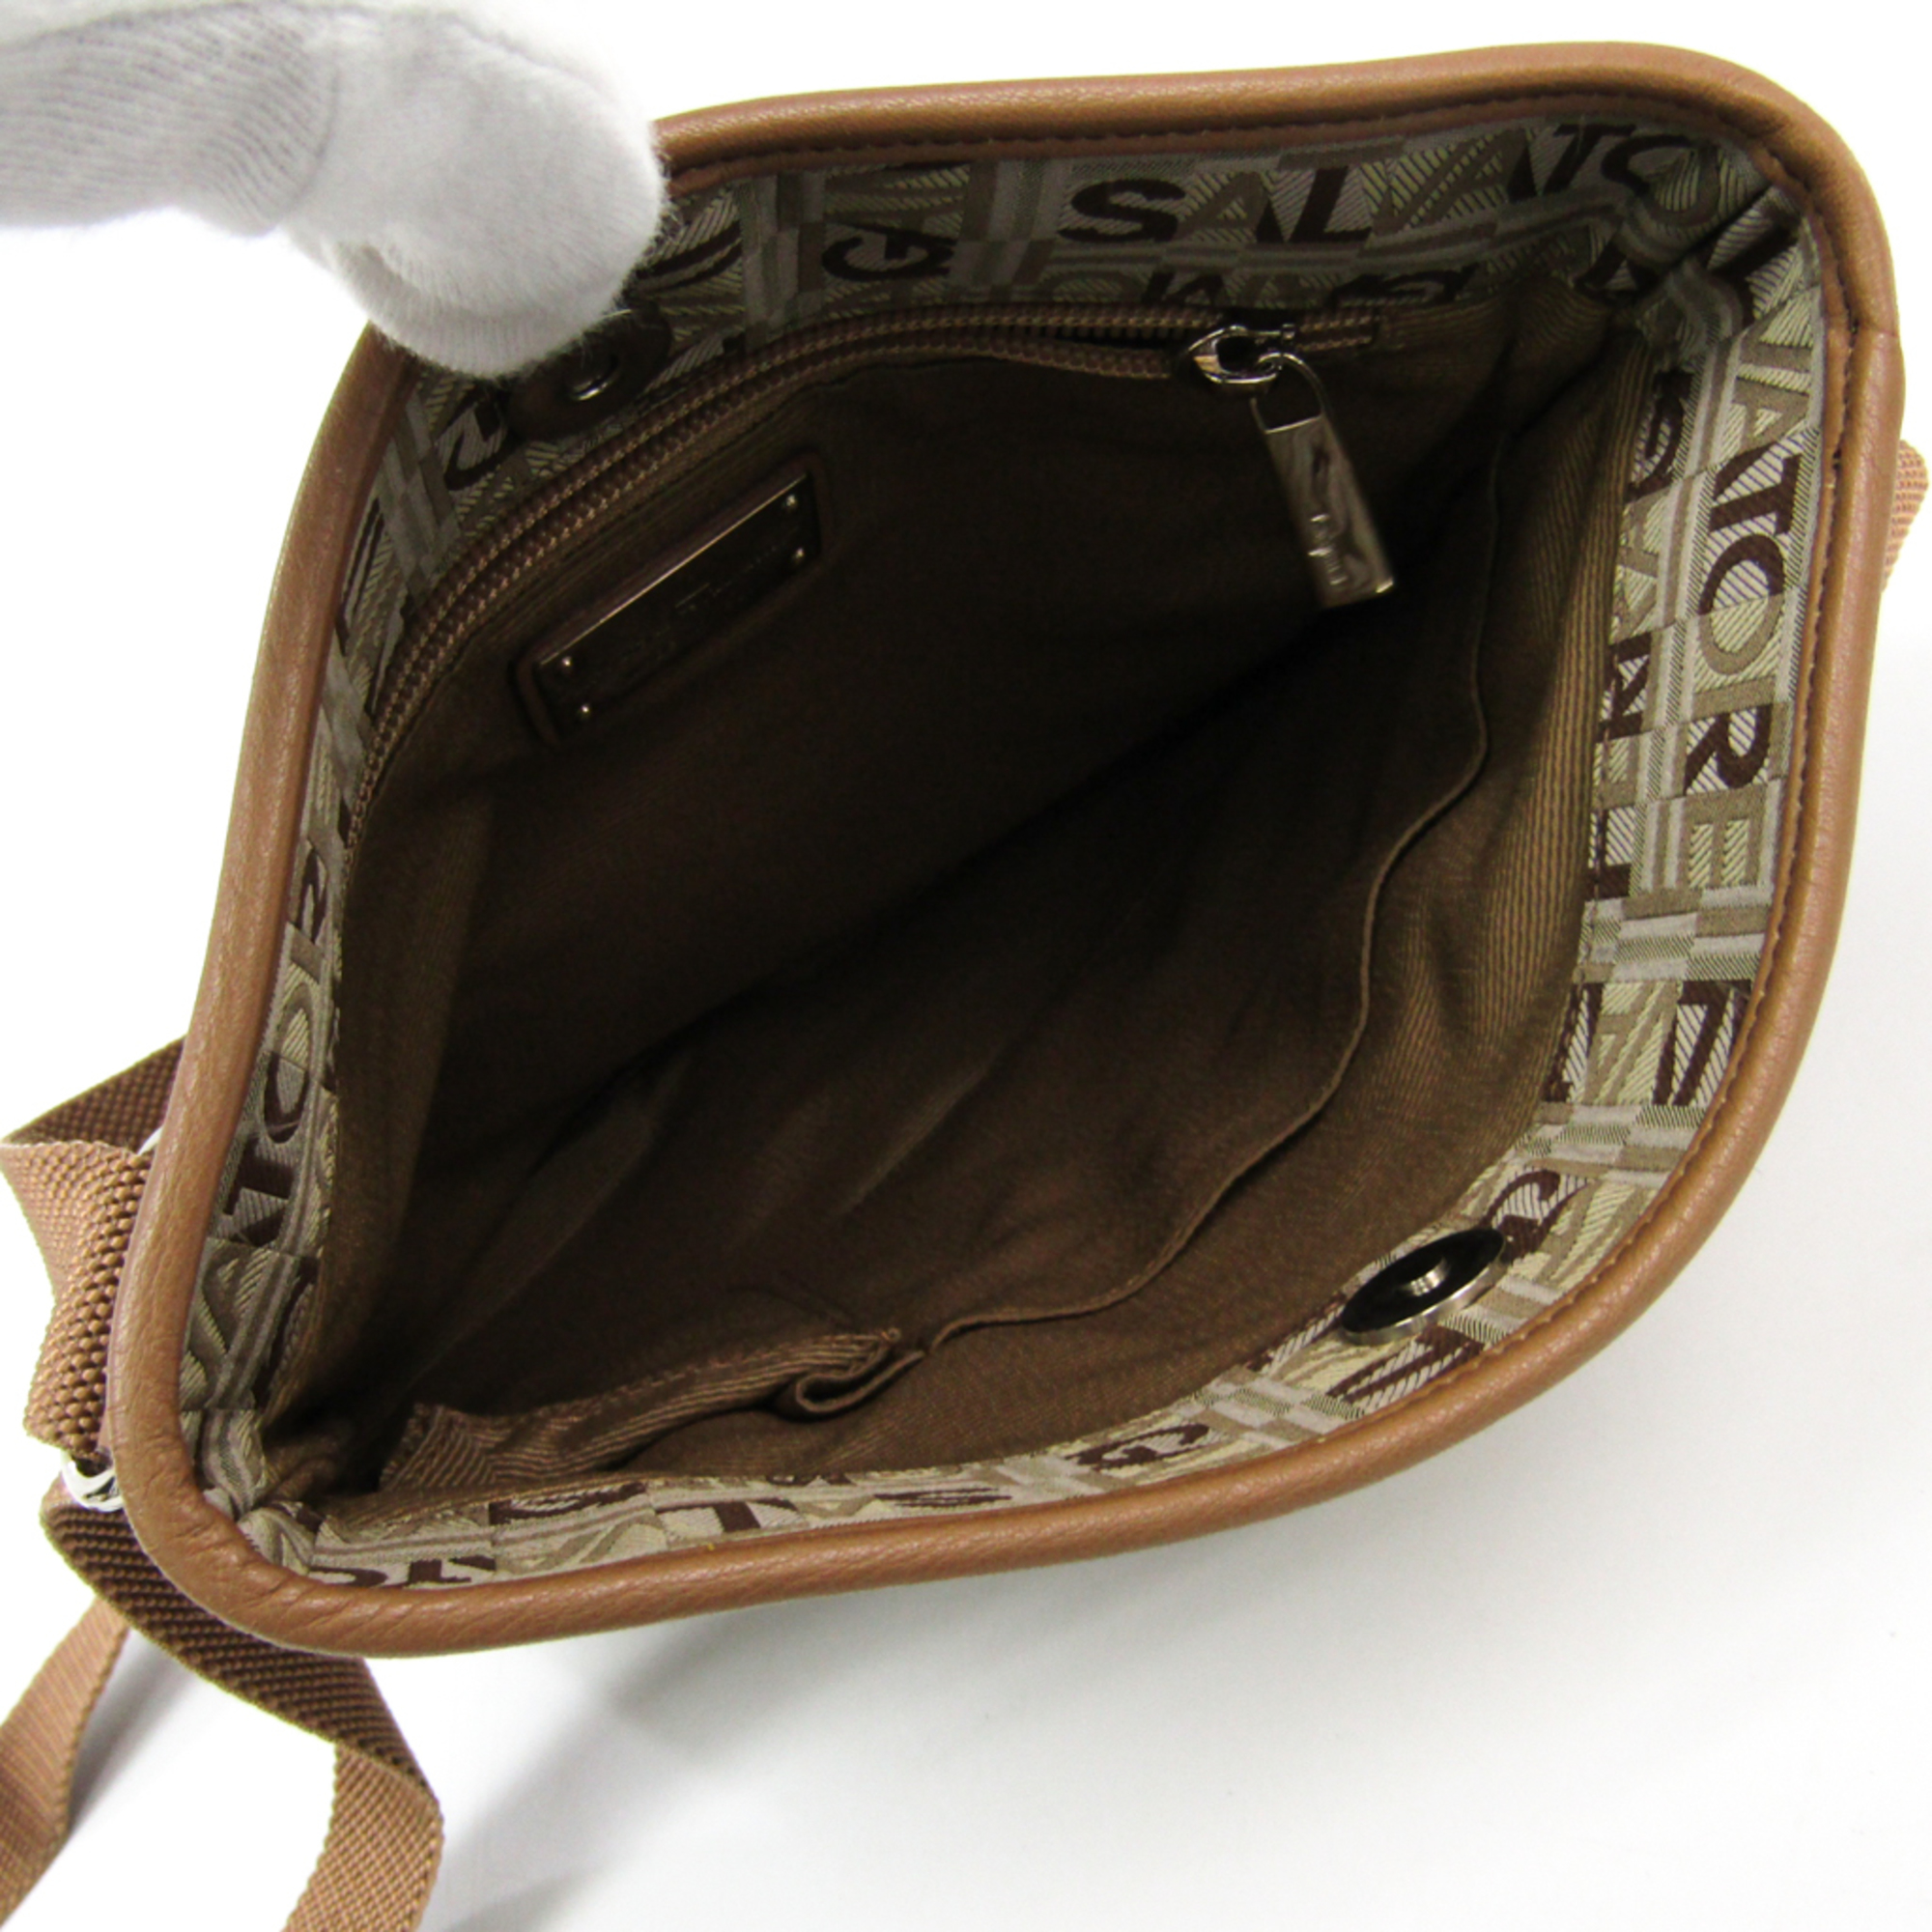 Salvatore Ferragamo Women's Leather,Canvas Shoulder Bag Beige,Brown